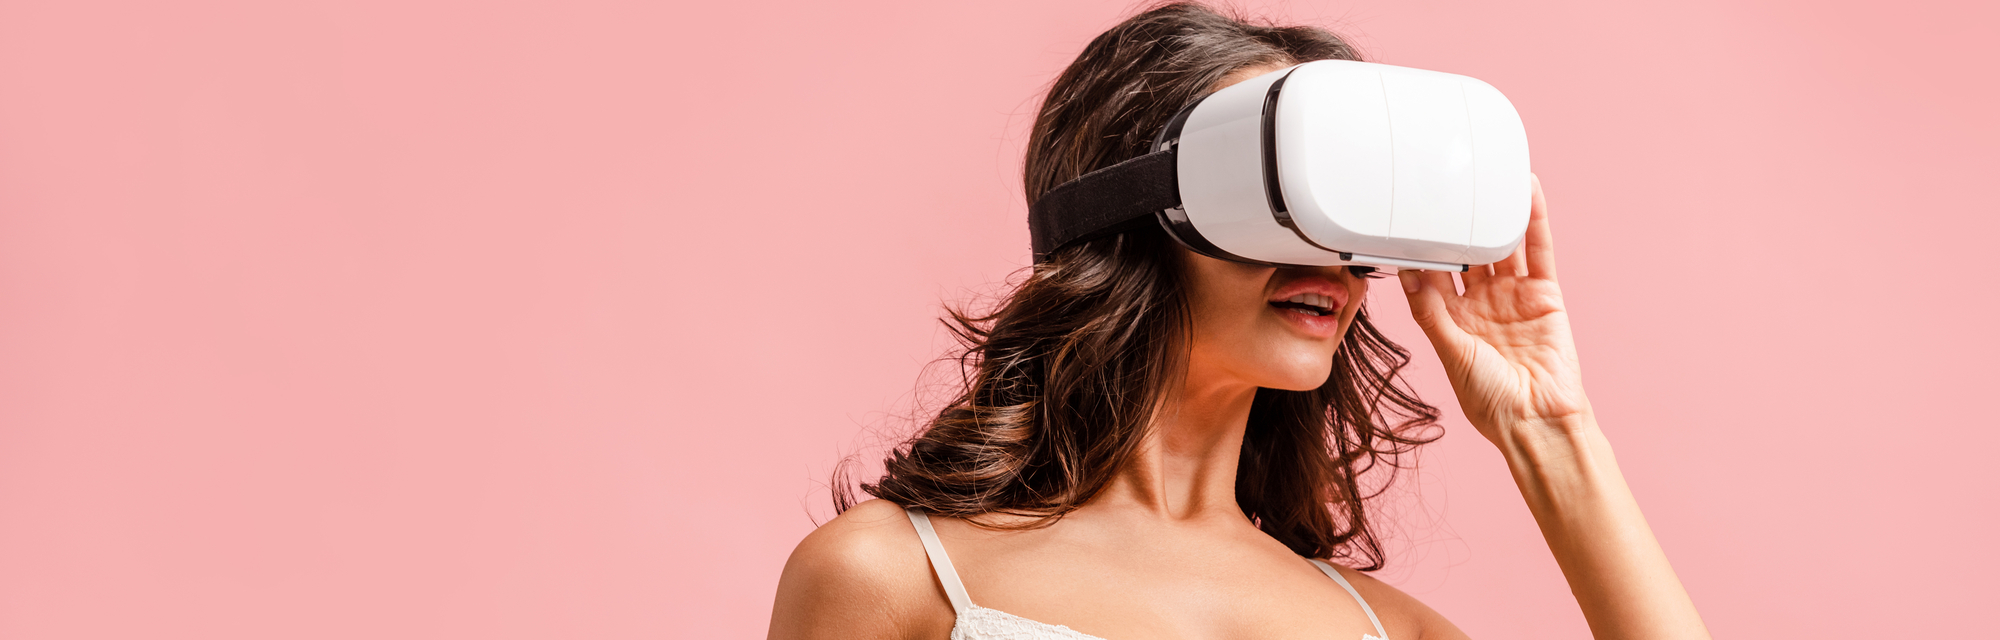 Virtual Reality Sex Toys - VR Sex Toys: Best Interactive Virtual Reality Masturbators & Machines